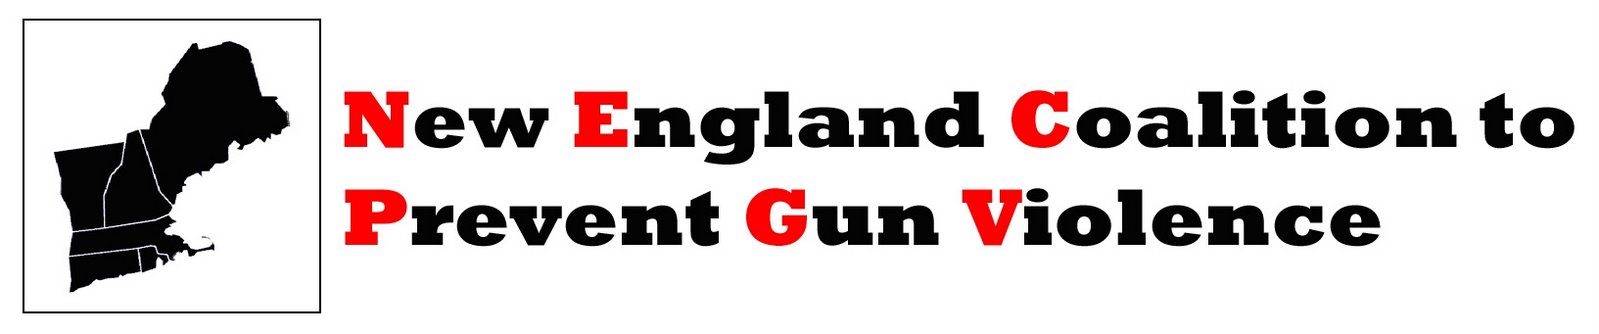 New England Coalition to Prevent Gun Violence